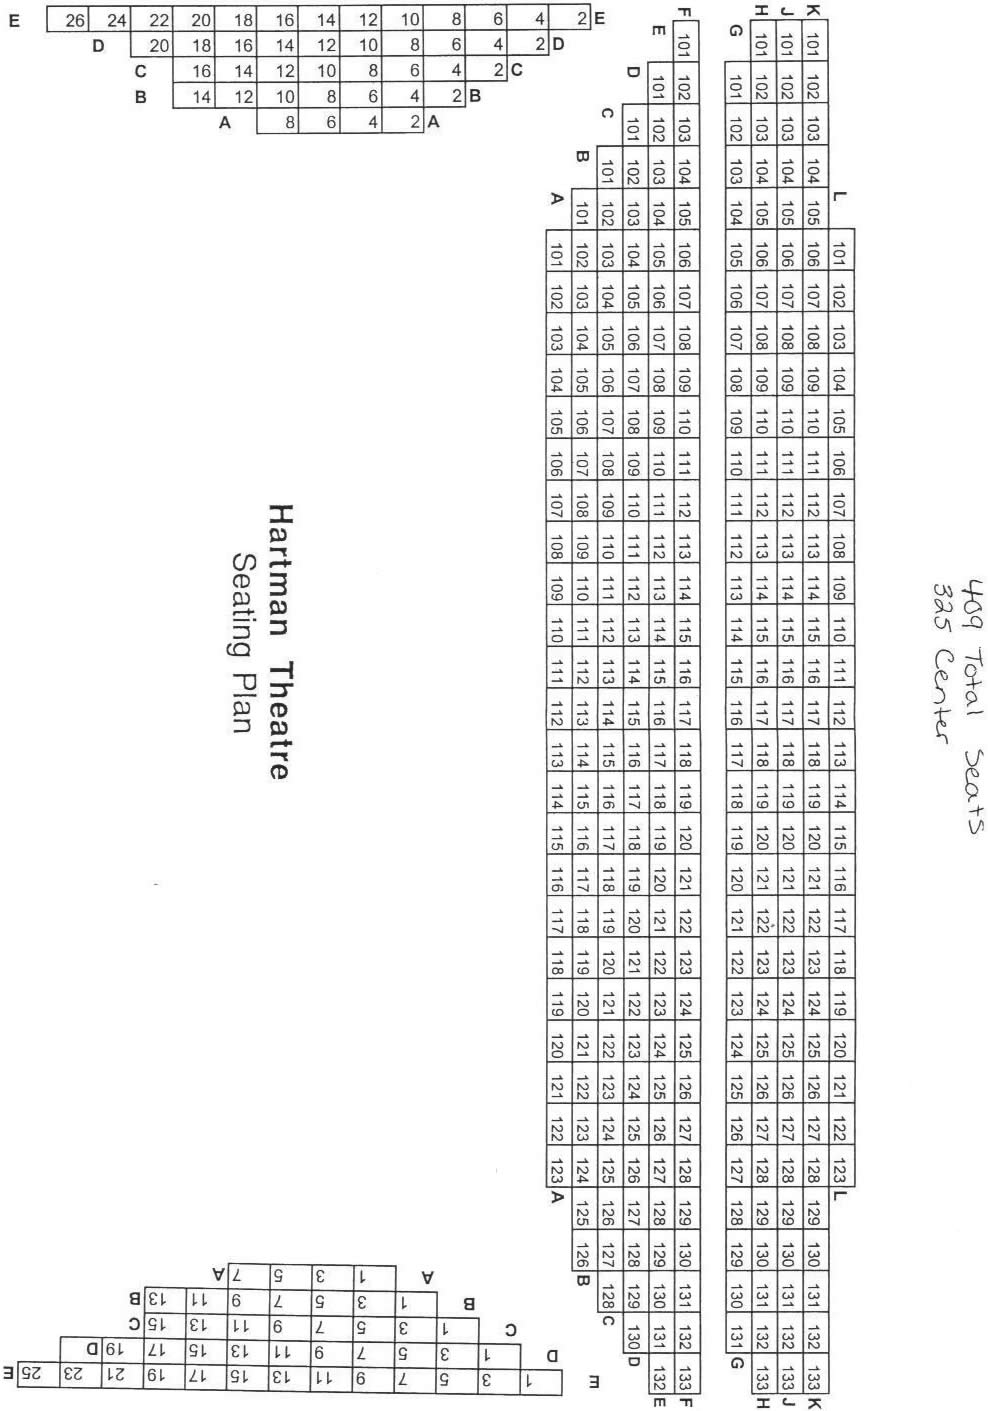 Theater Seating Diagram